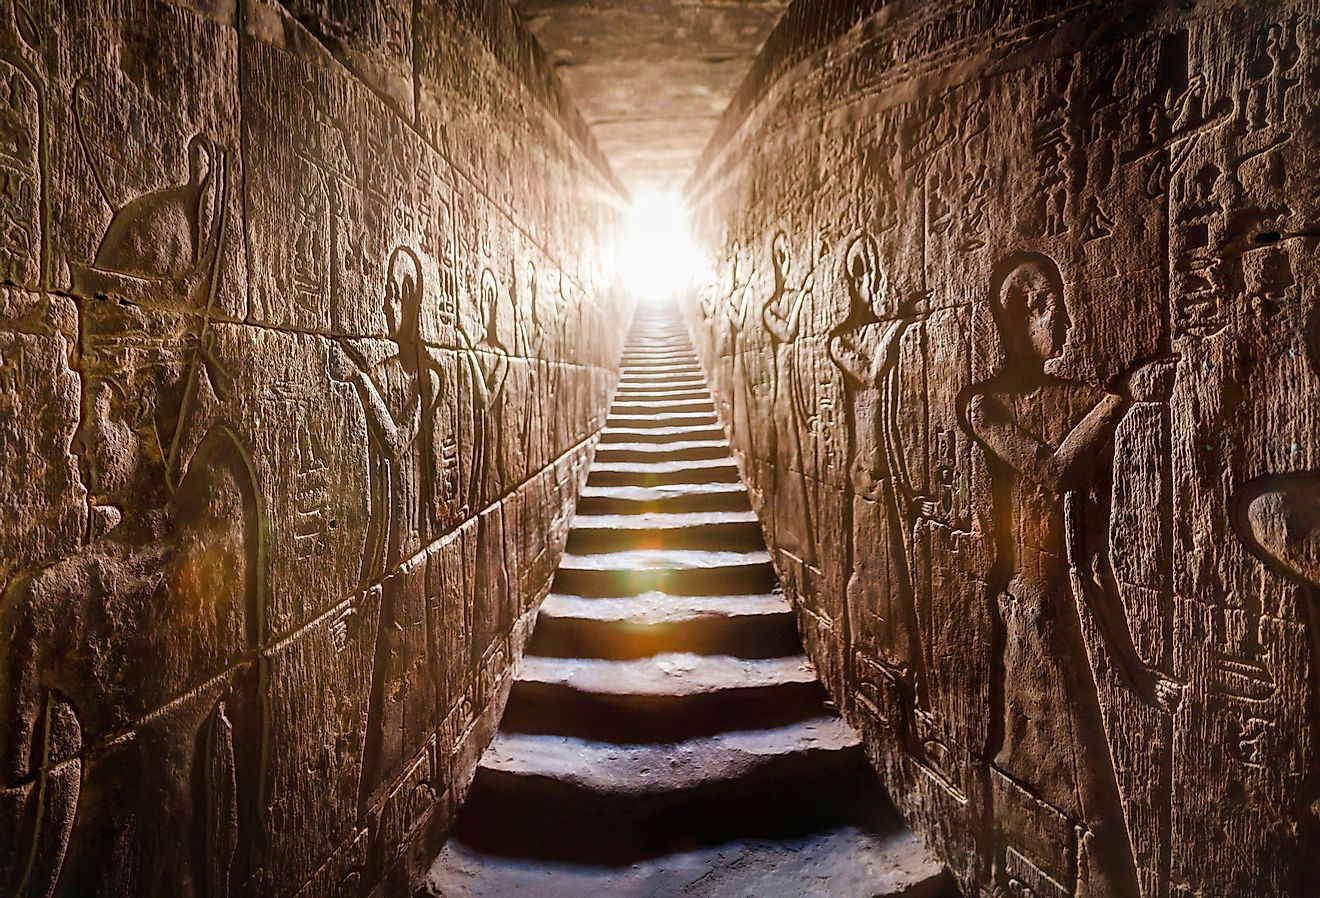 Egypt Edfu temple, Aswan. Image credit: akimov konstantin via Shutterstock